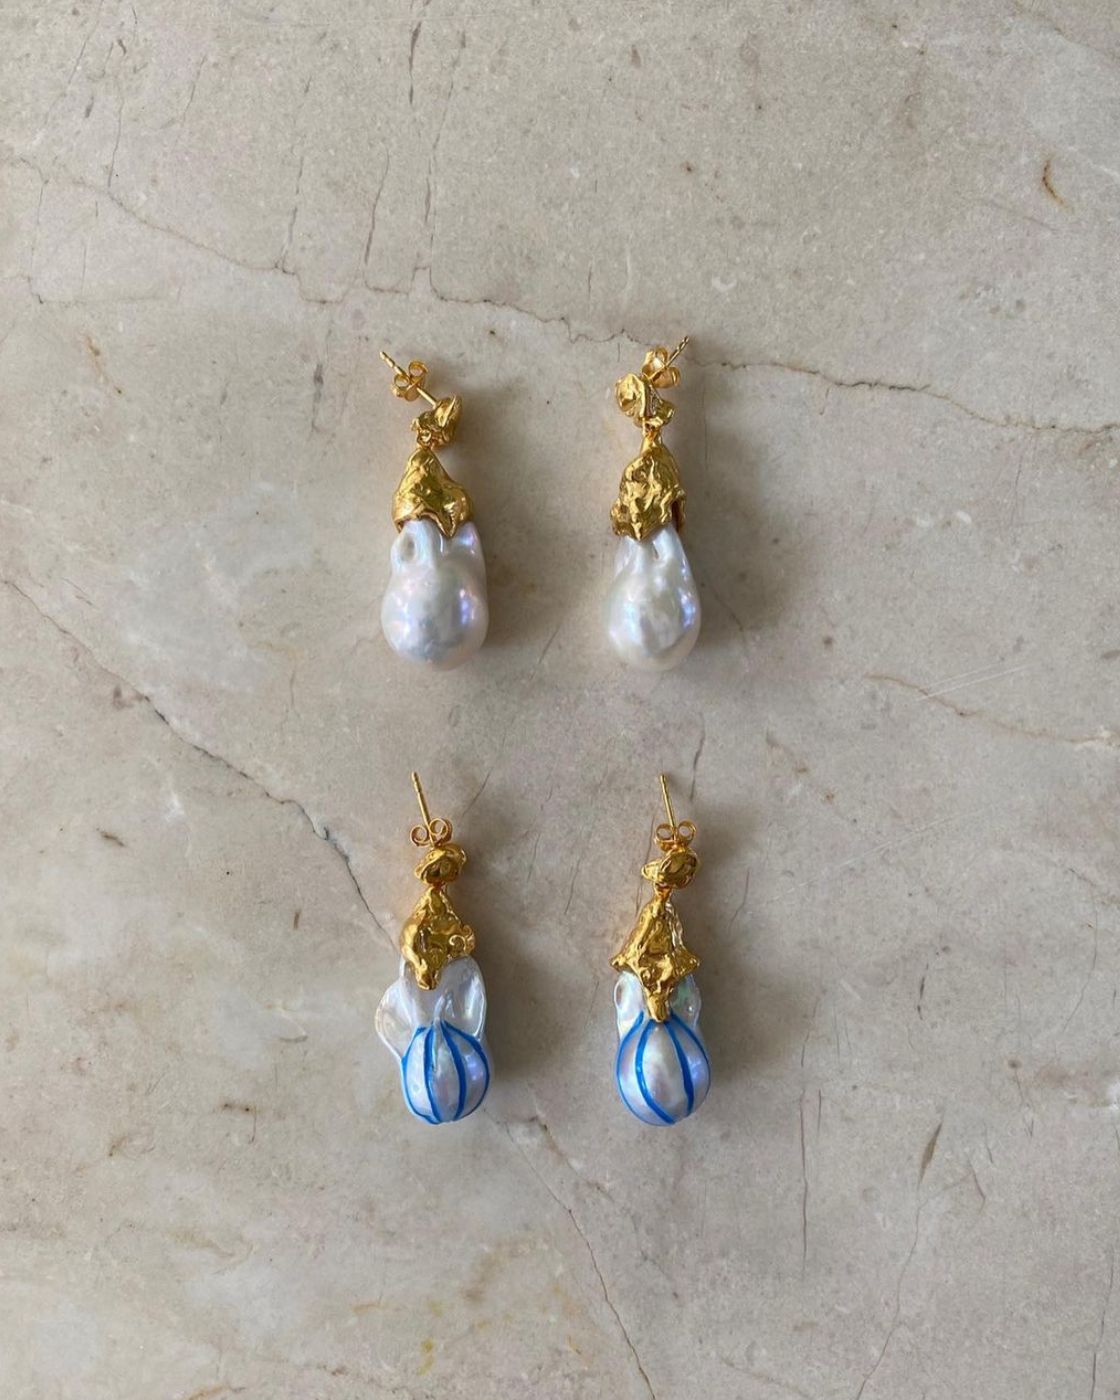 The Classic Pearl Earrings